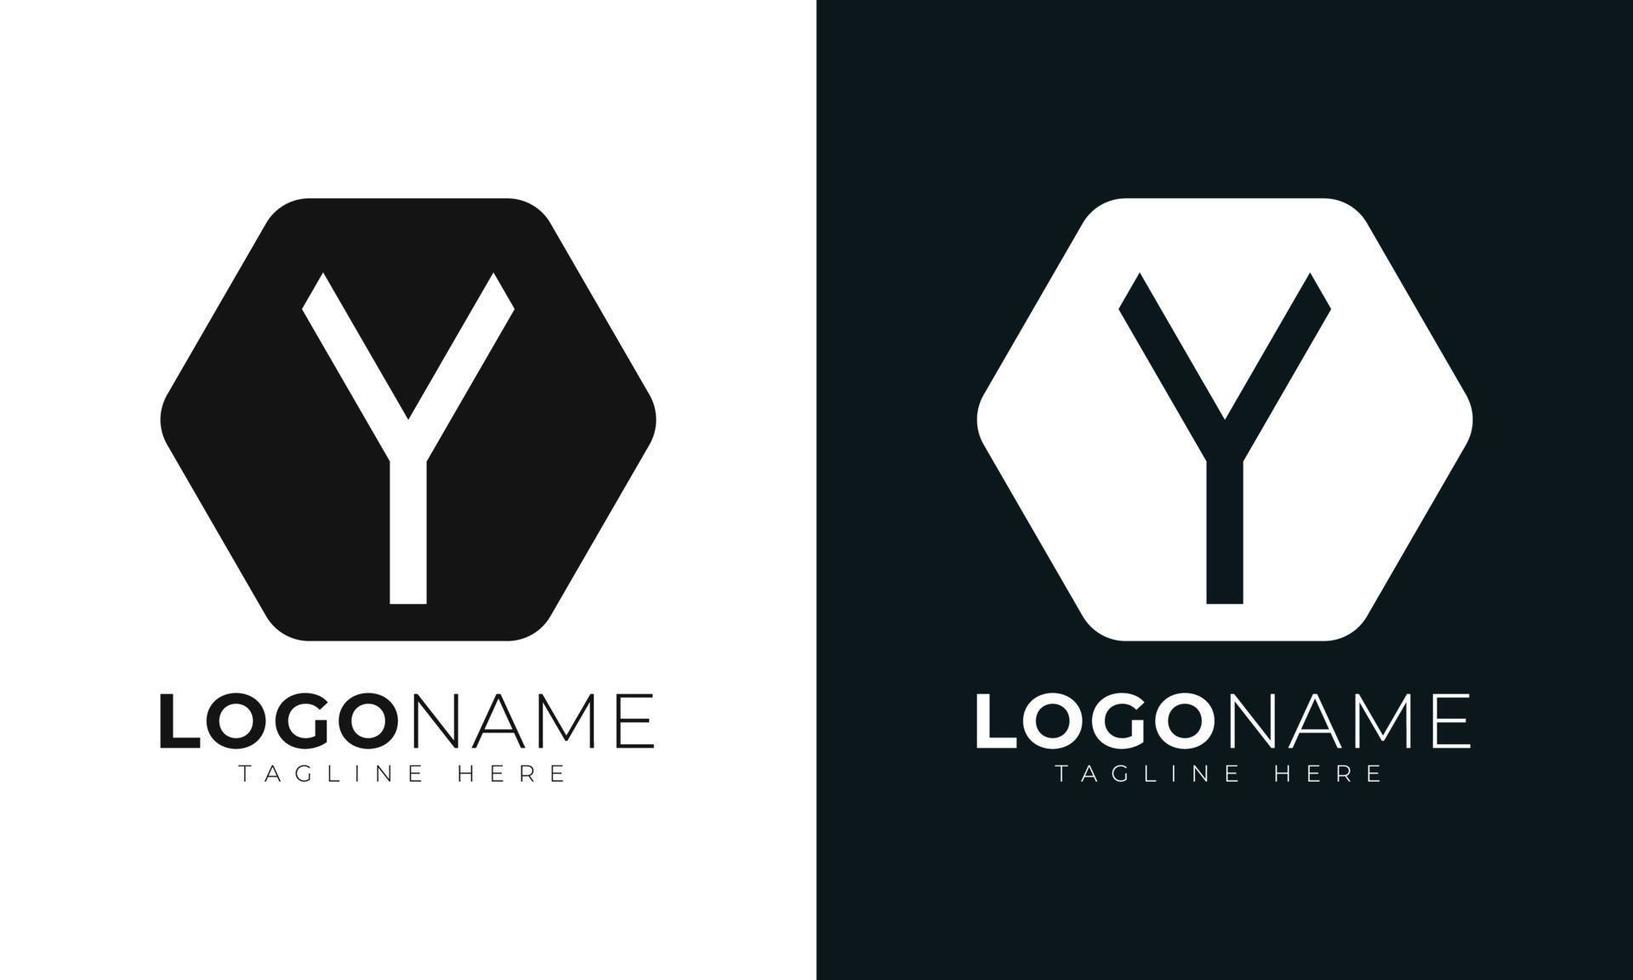 WebInitial letter y logo vector design template. With Hexagonal shape. Polygonal style.